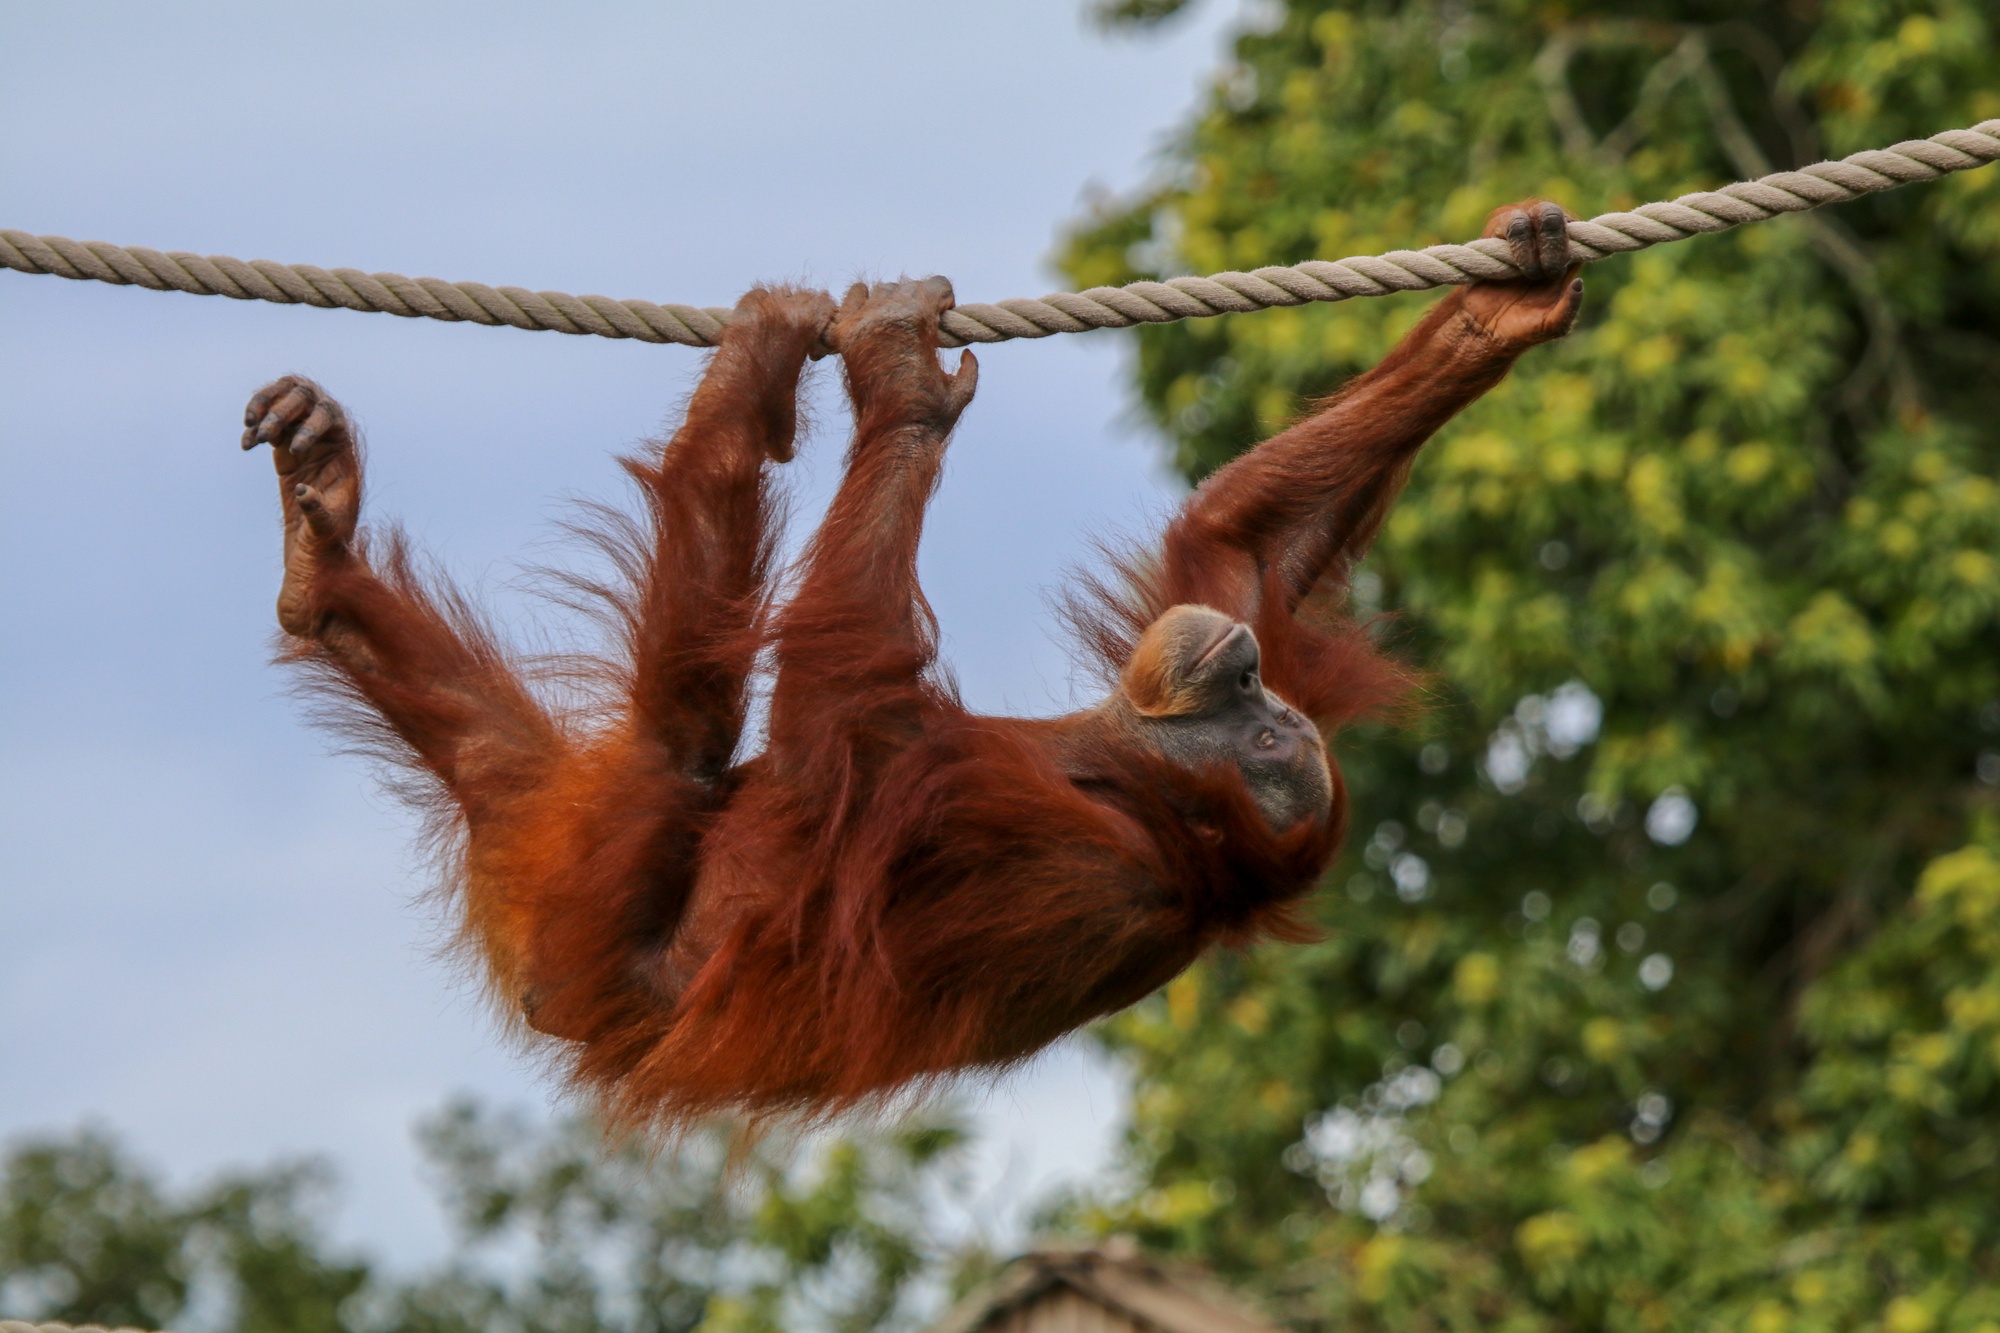 Sumatran orangutan climbing upsidedown along rope